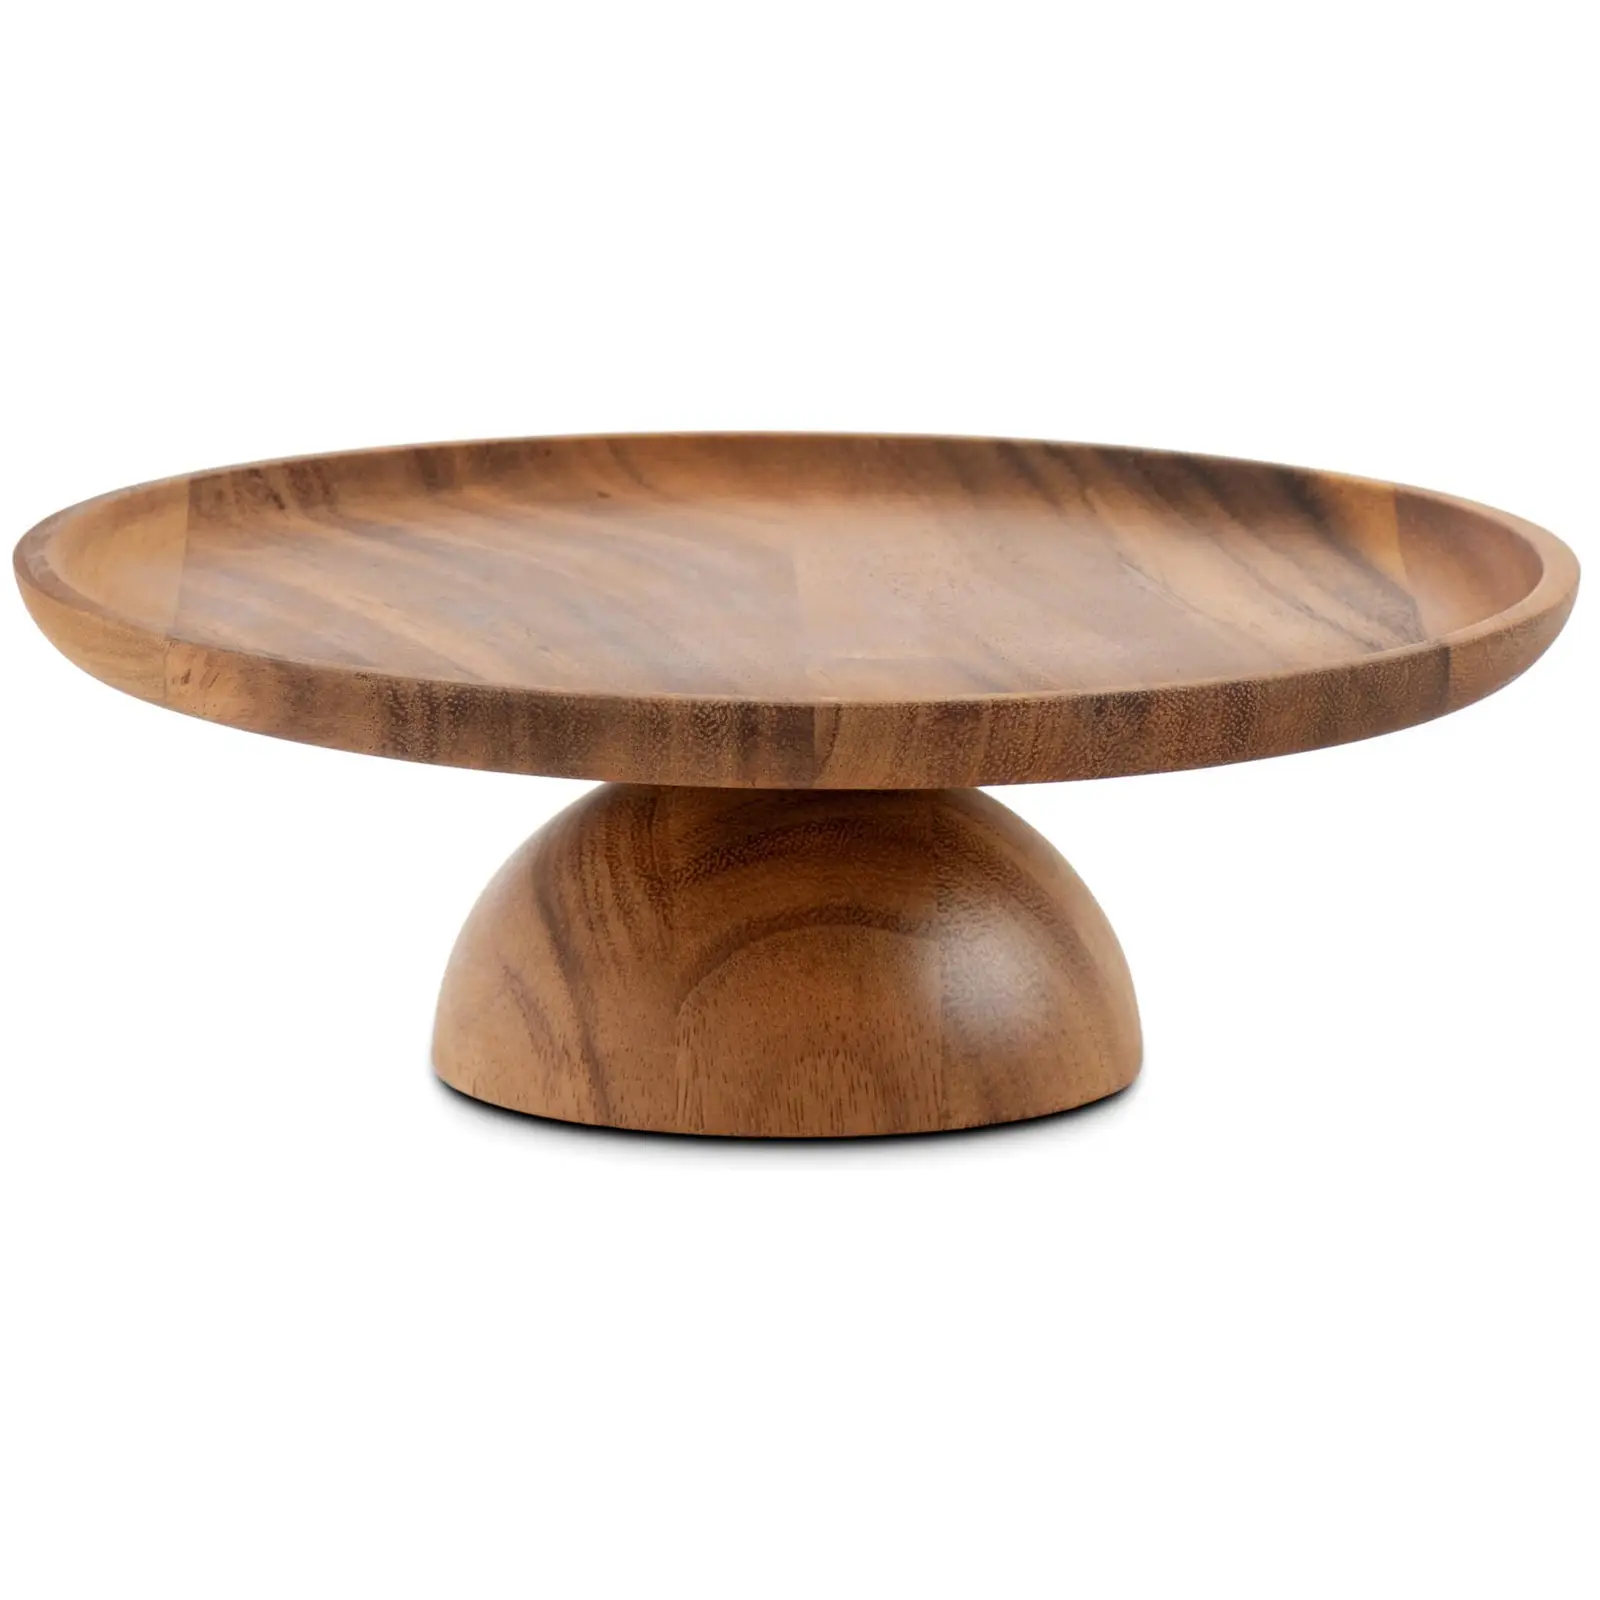 Cake Plate - Oiled acacia wood -  diameter: 24 cm - height: 8 cm